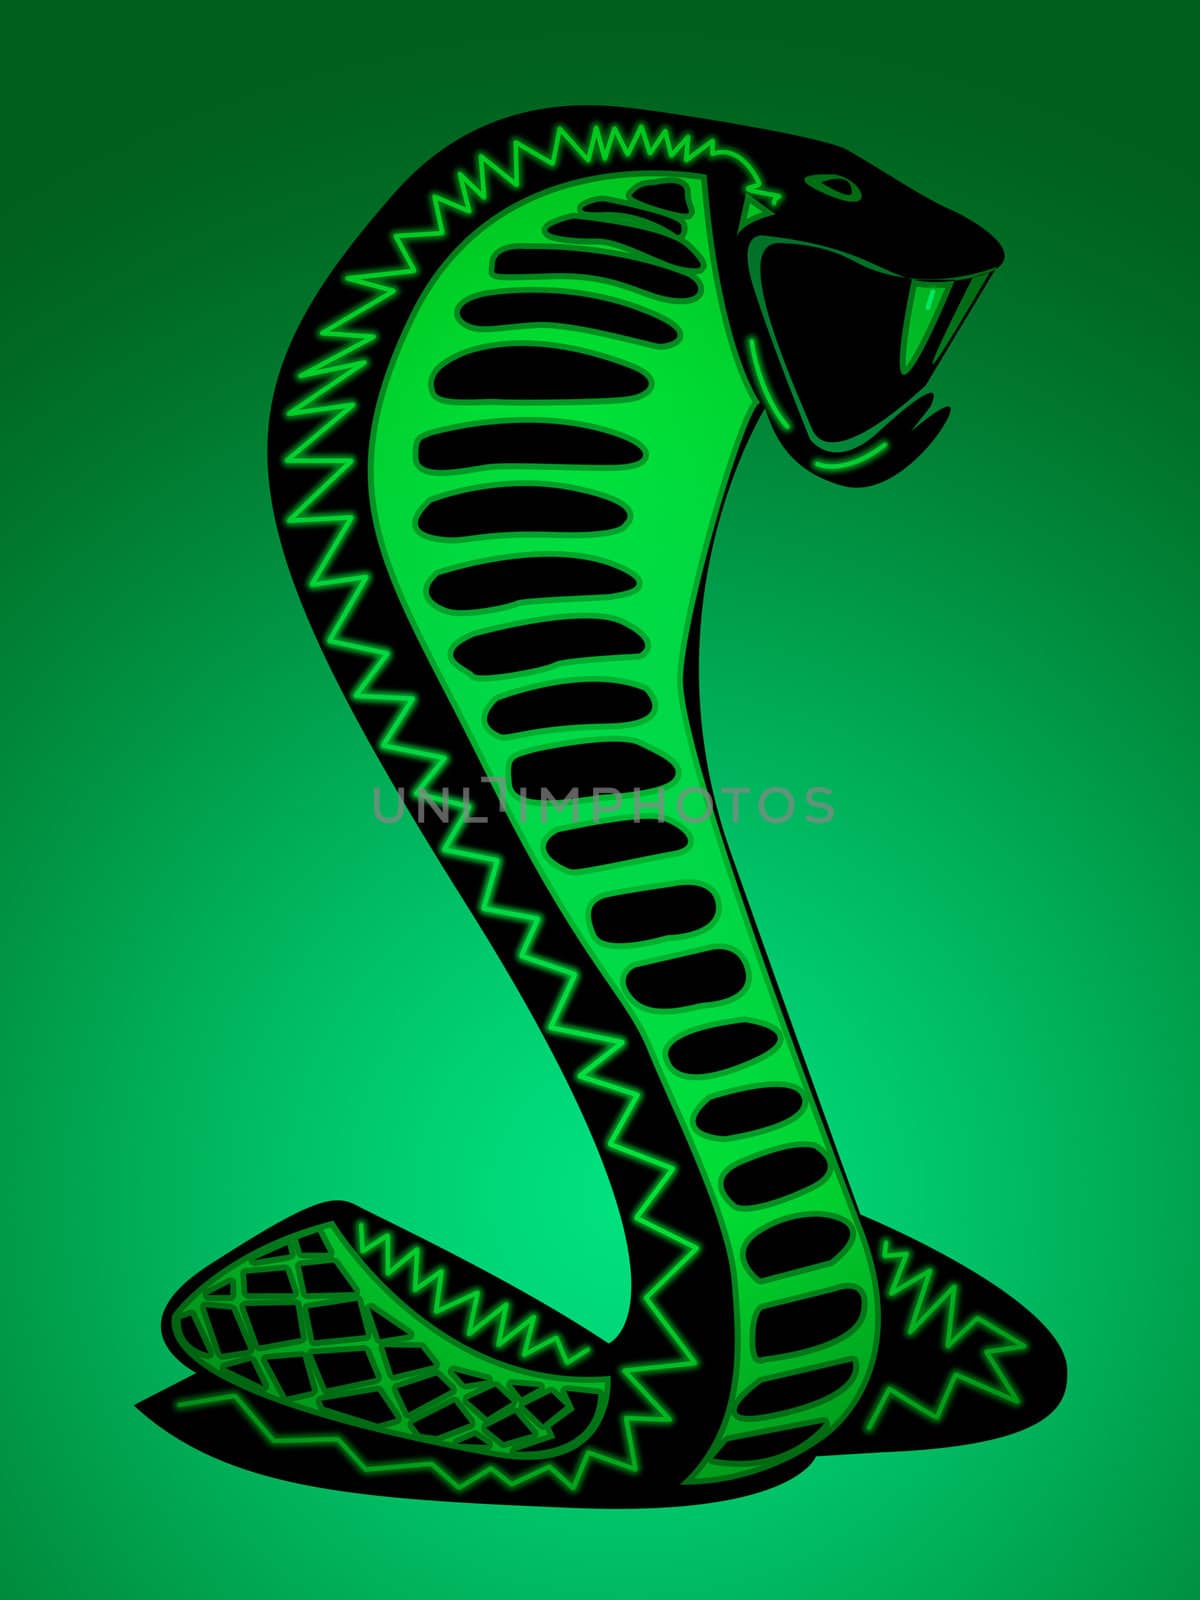 Funky Snake Illustration Design on Green Background